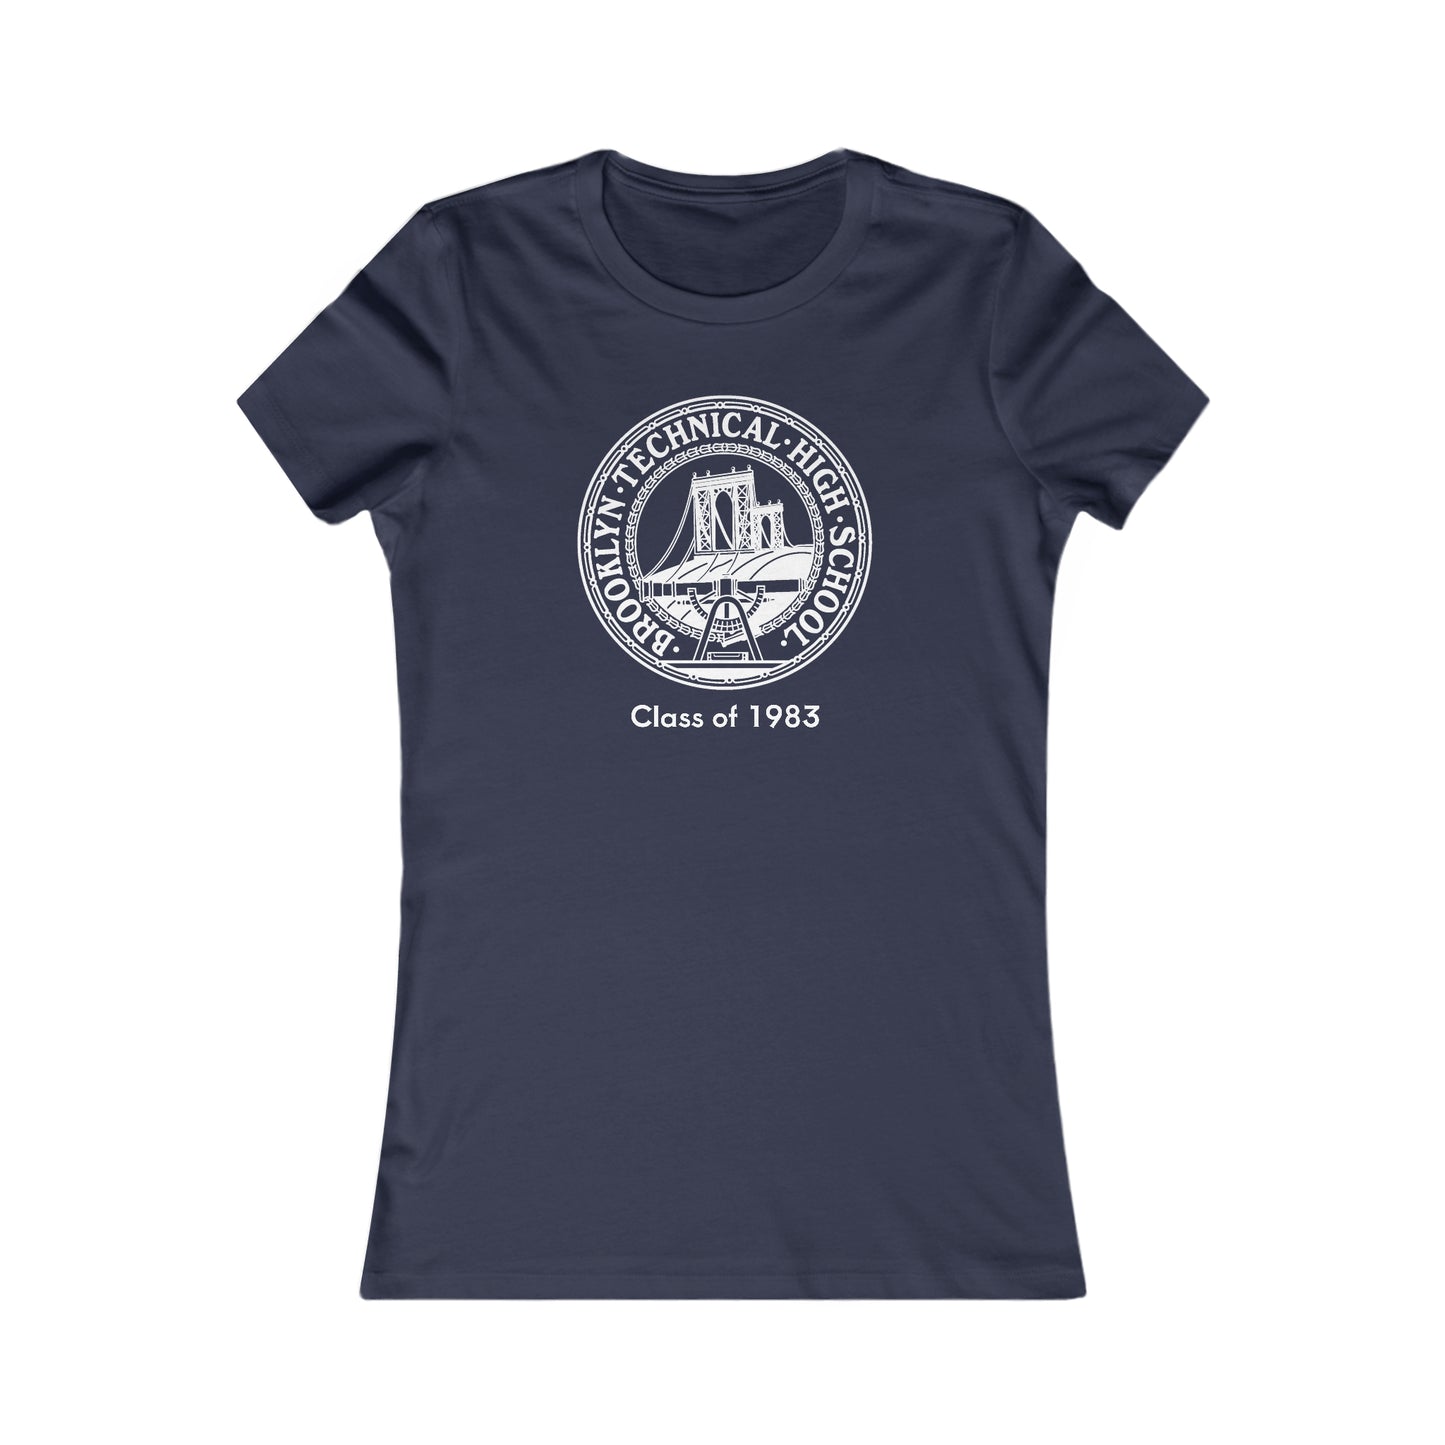 Classic Tech Seal - Ladies Favorite T-Shirt - Class Of 1983